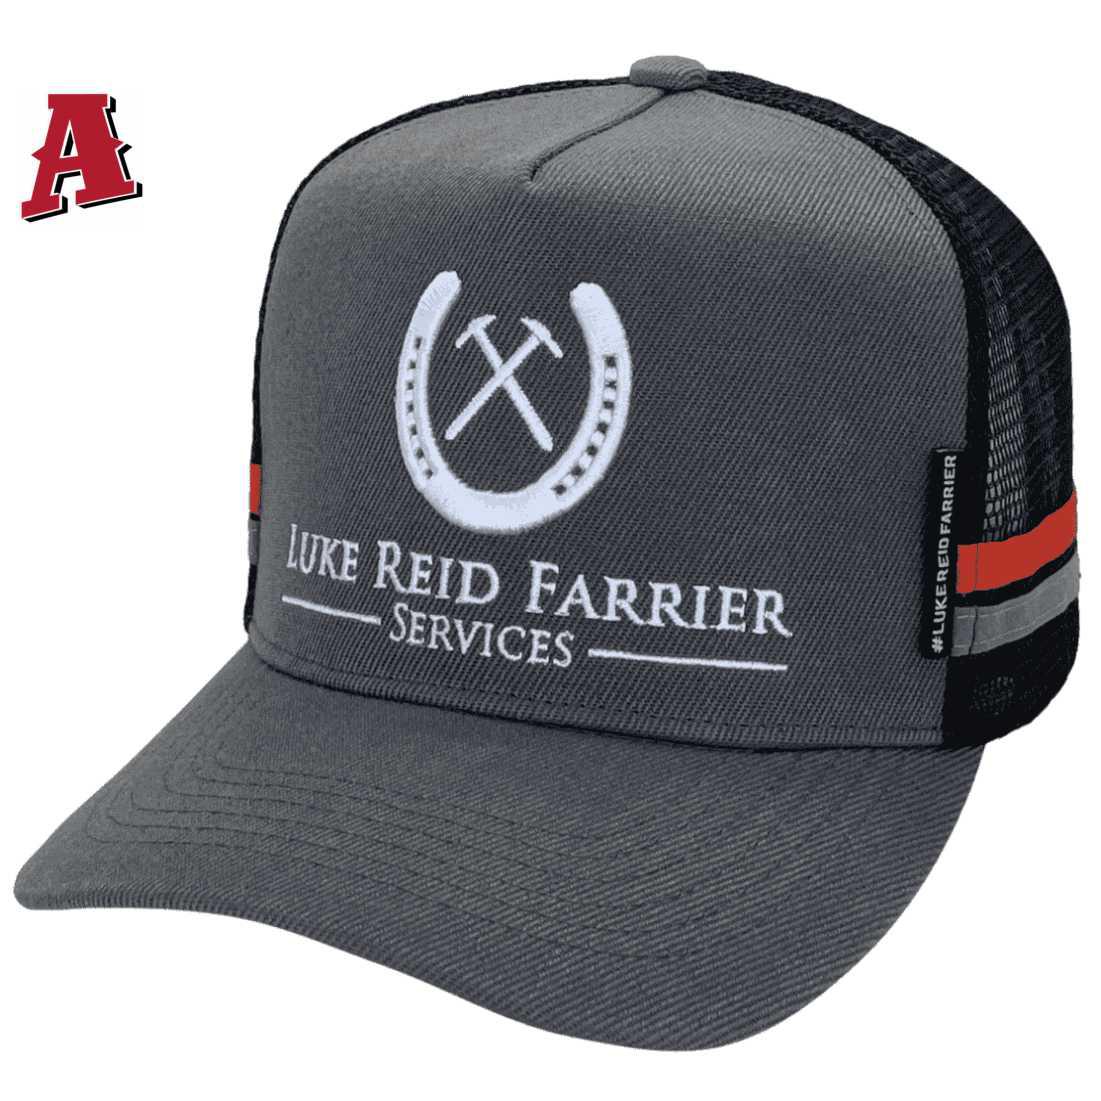 Luke Reid Farrier Services Serpentine-Jarrahdale Perth WA HP Midrange Aussie Trucker Hat with Australian Head Fit Crown and Double Sidebands